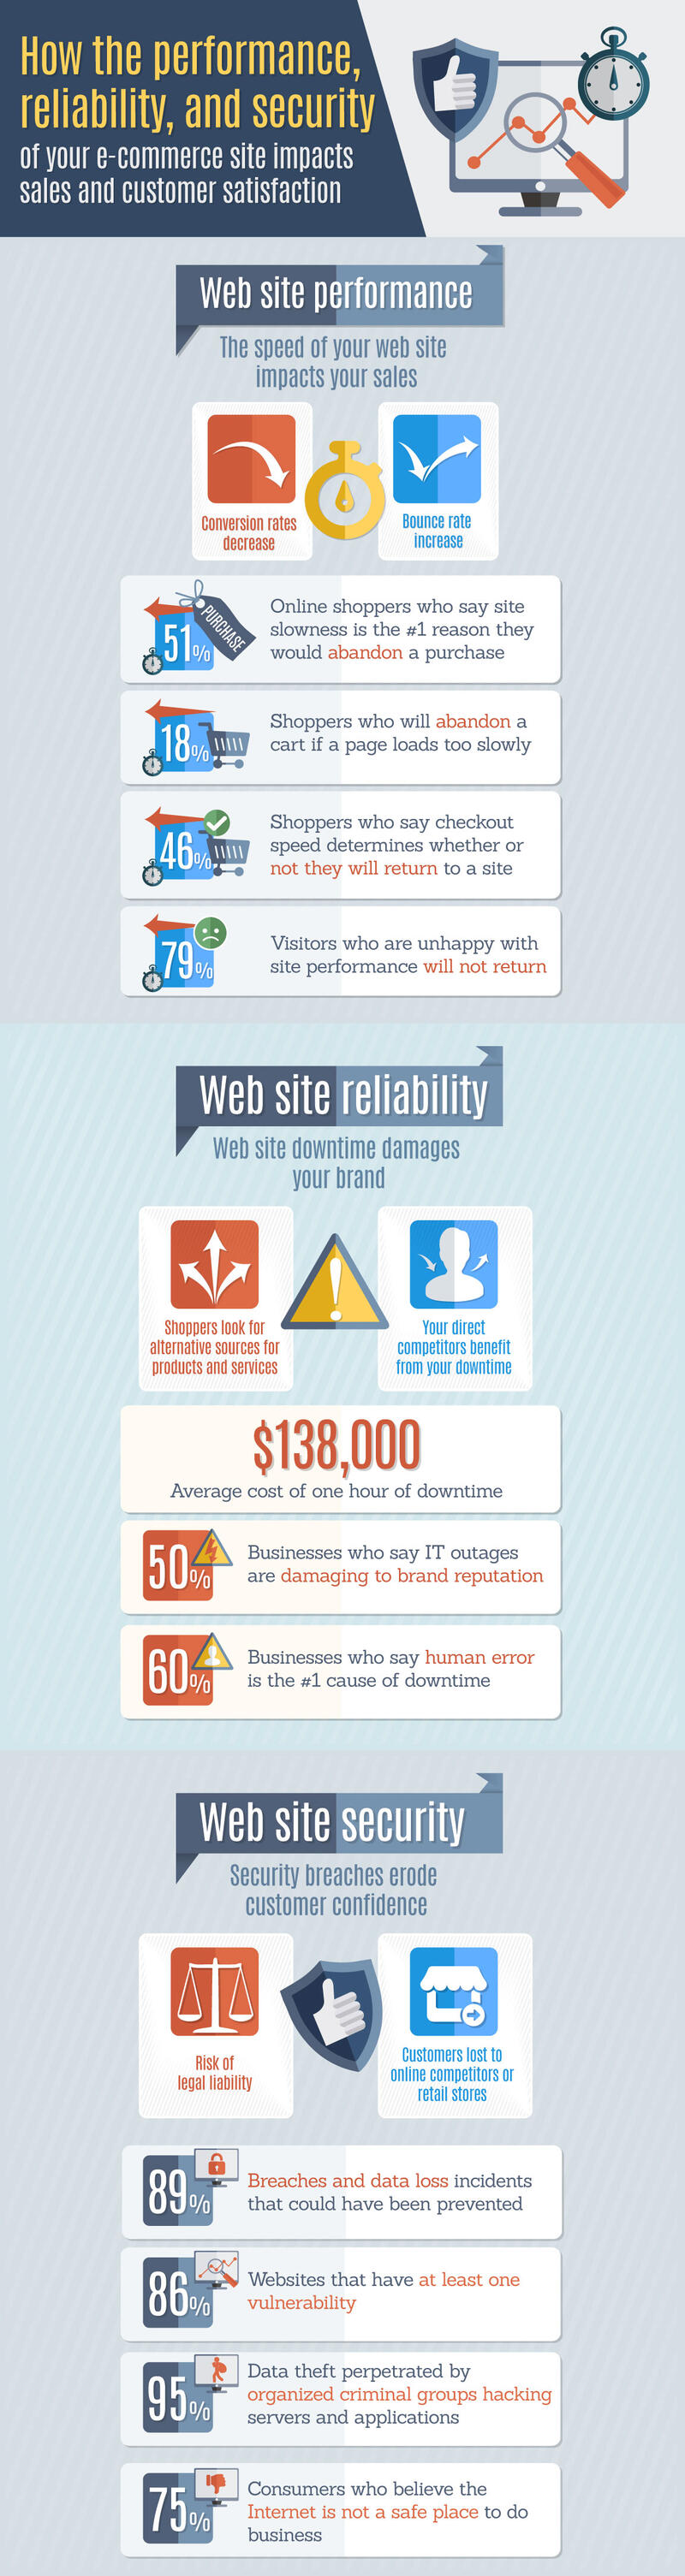 wefixit performance hosting infographic